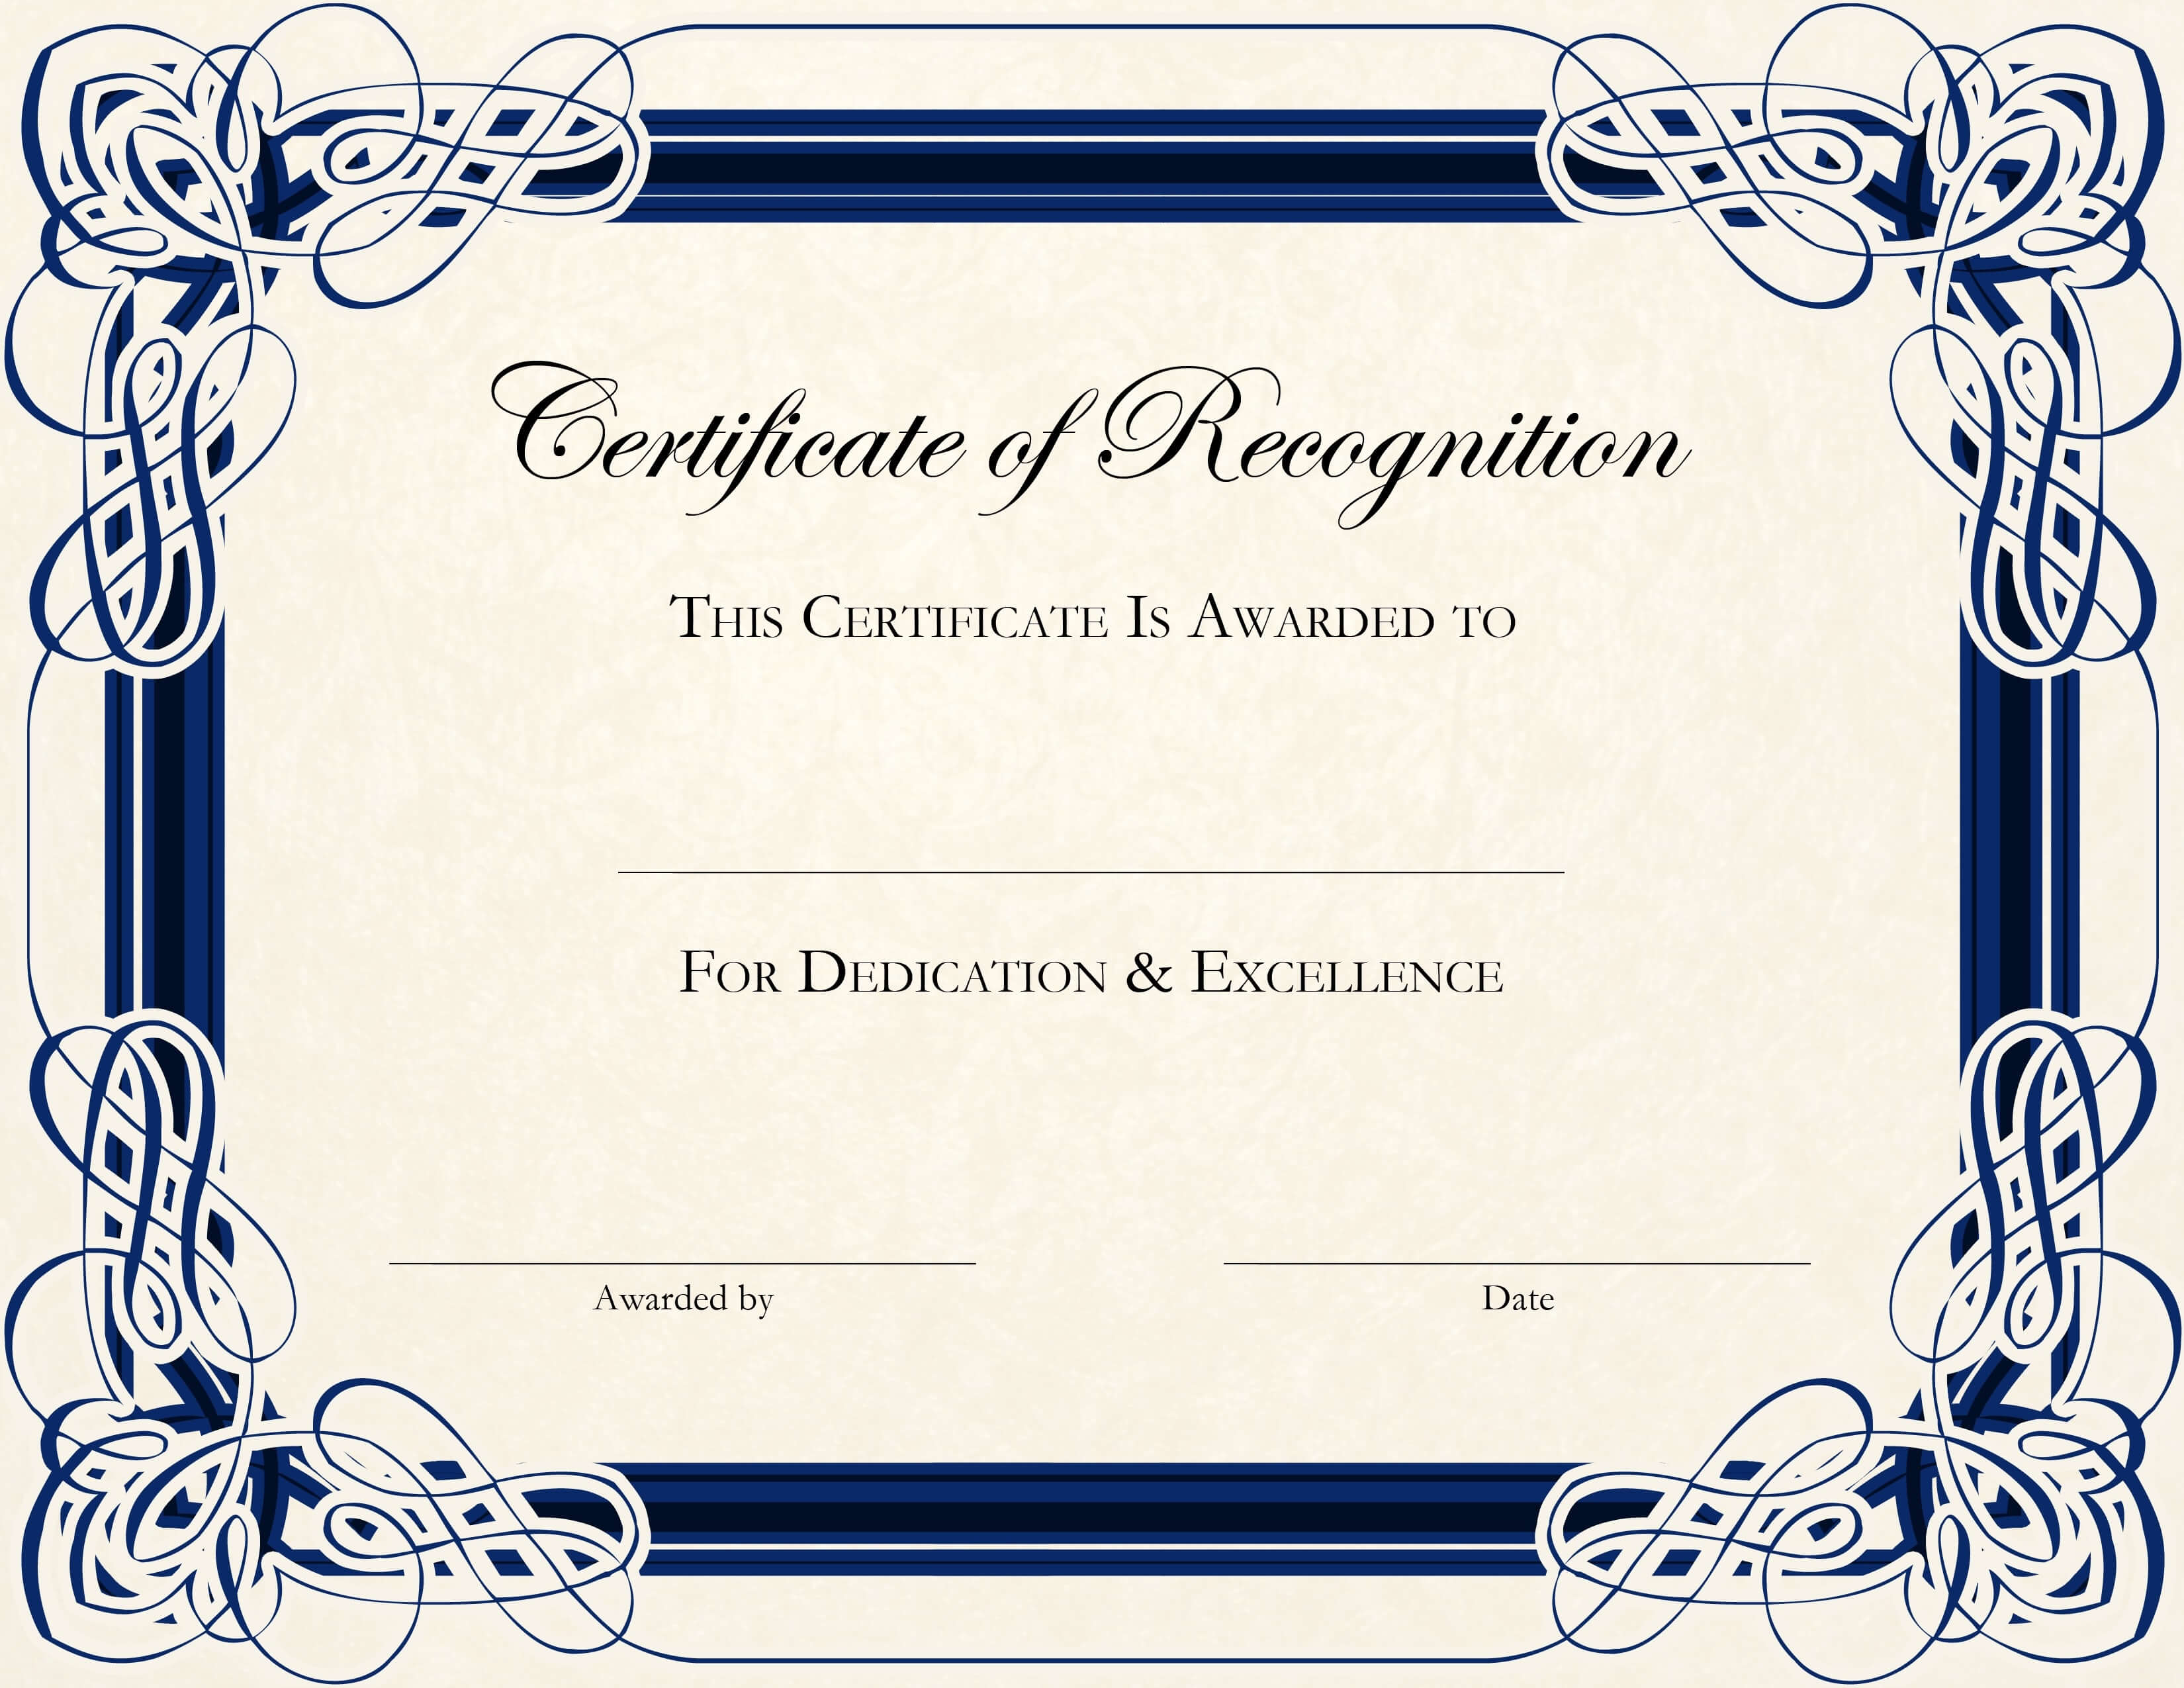 009 Certificate Of Appreciation Template Free Ideas Editable Intended For Free Certificate Of Appreciation Template Downloads